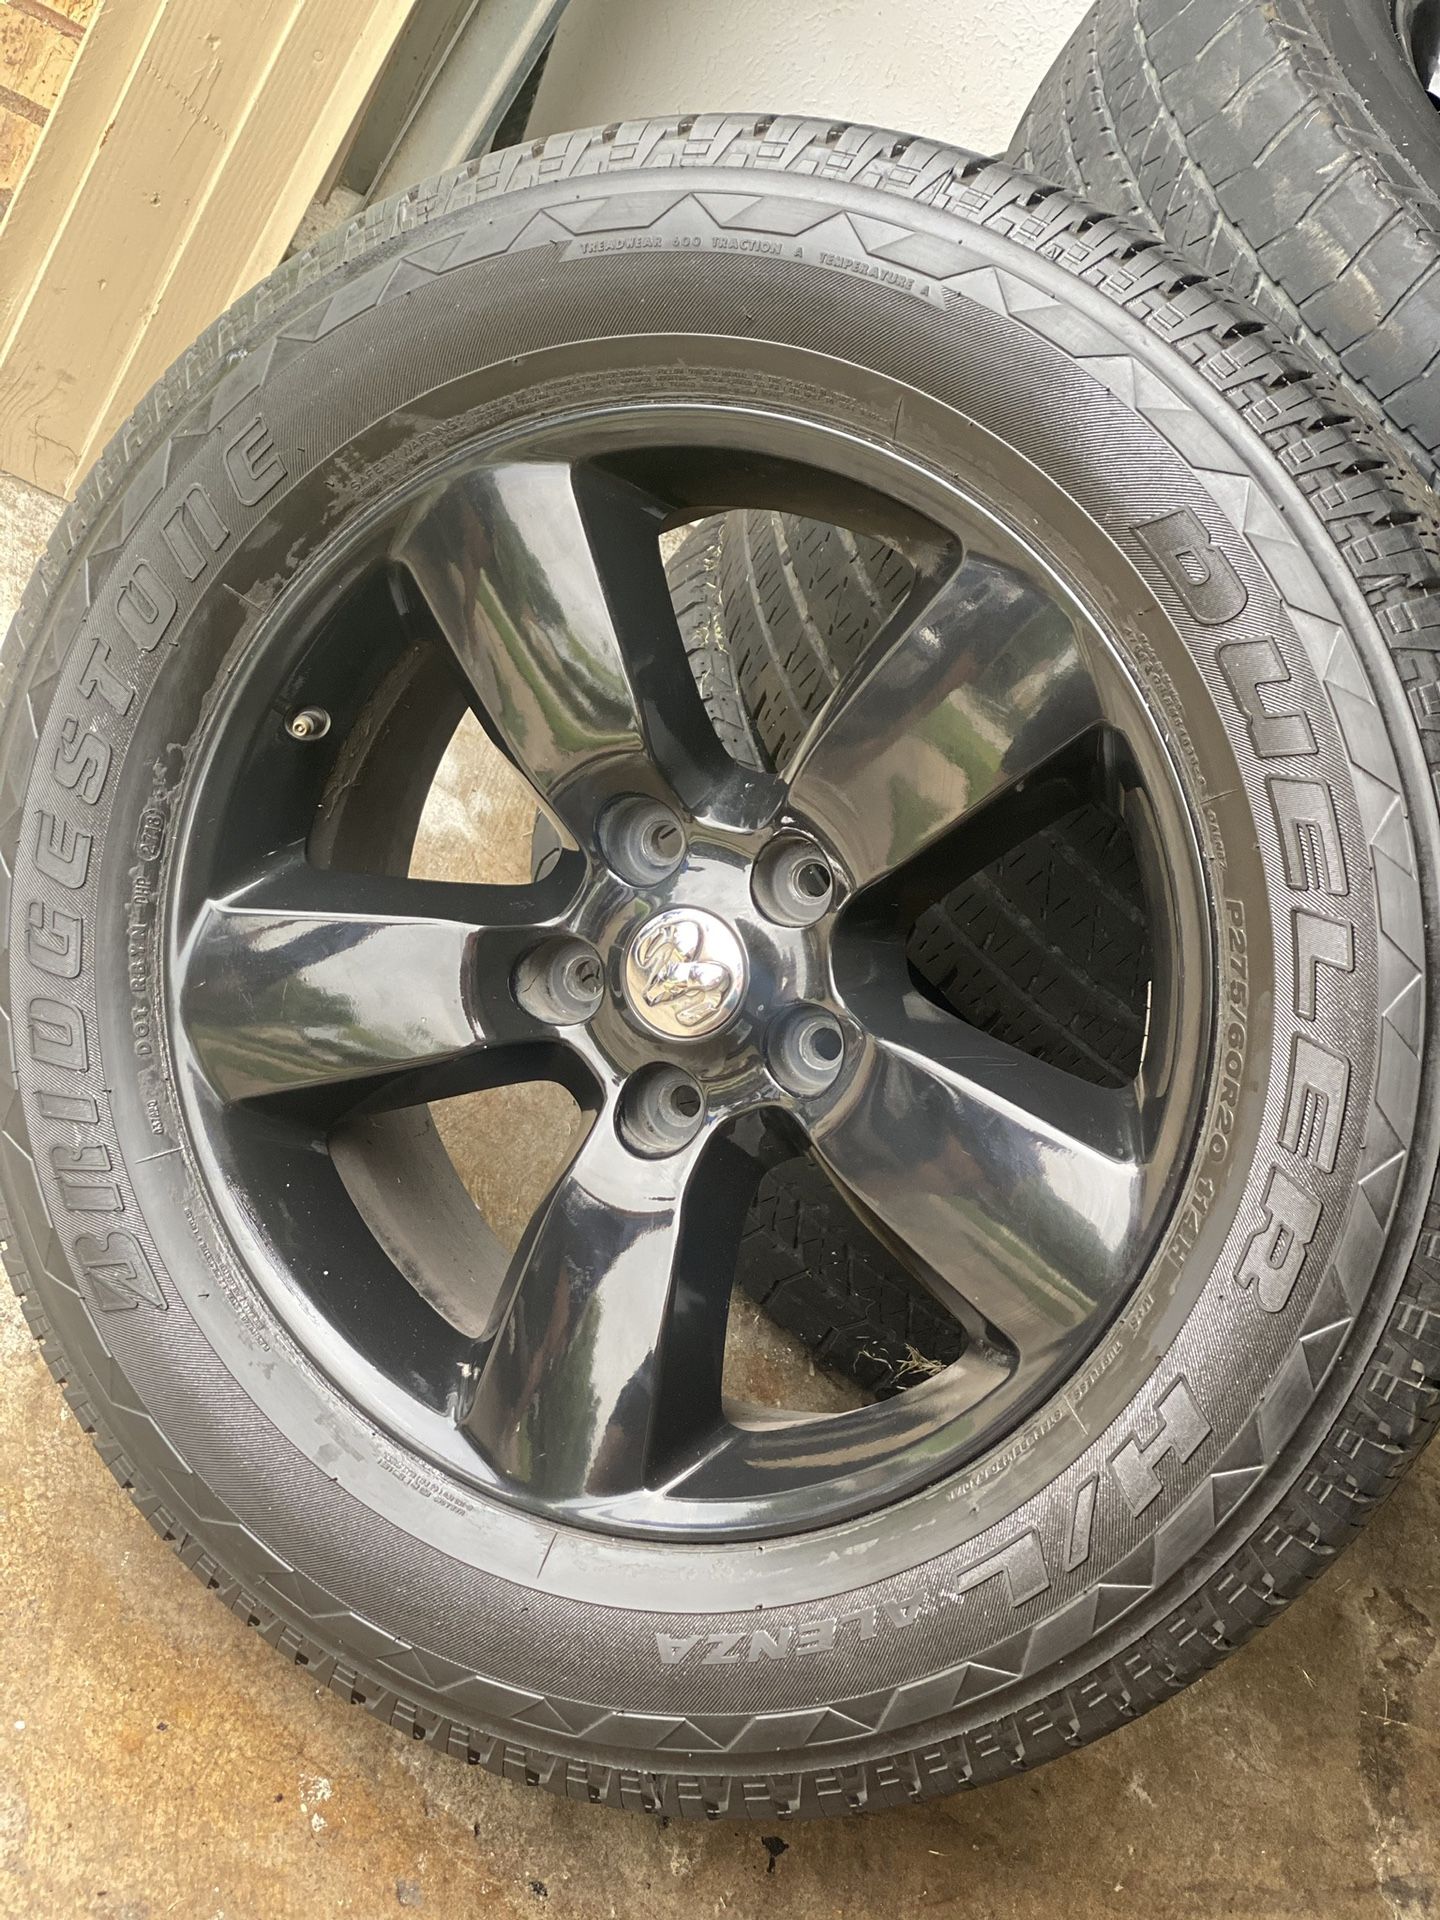 Tires/Dodge/20” Black Dodge Rim and tires